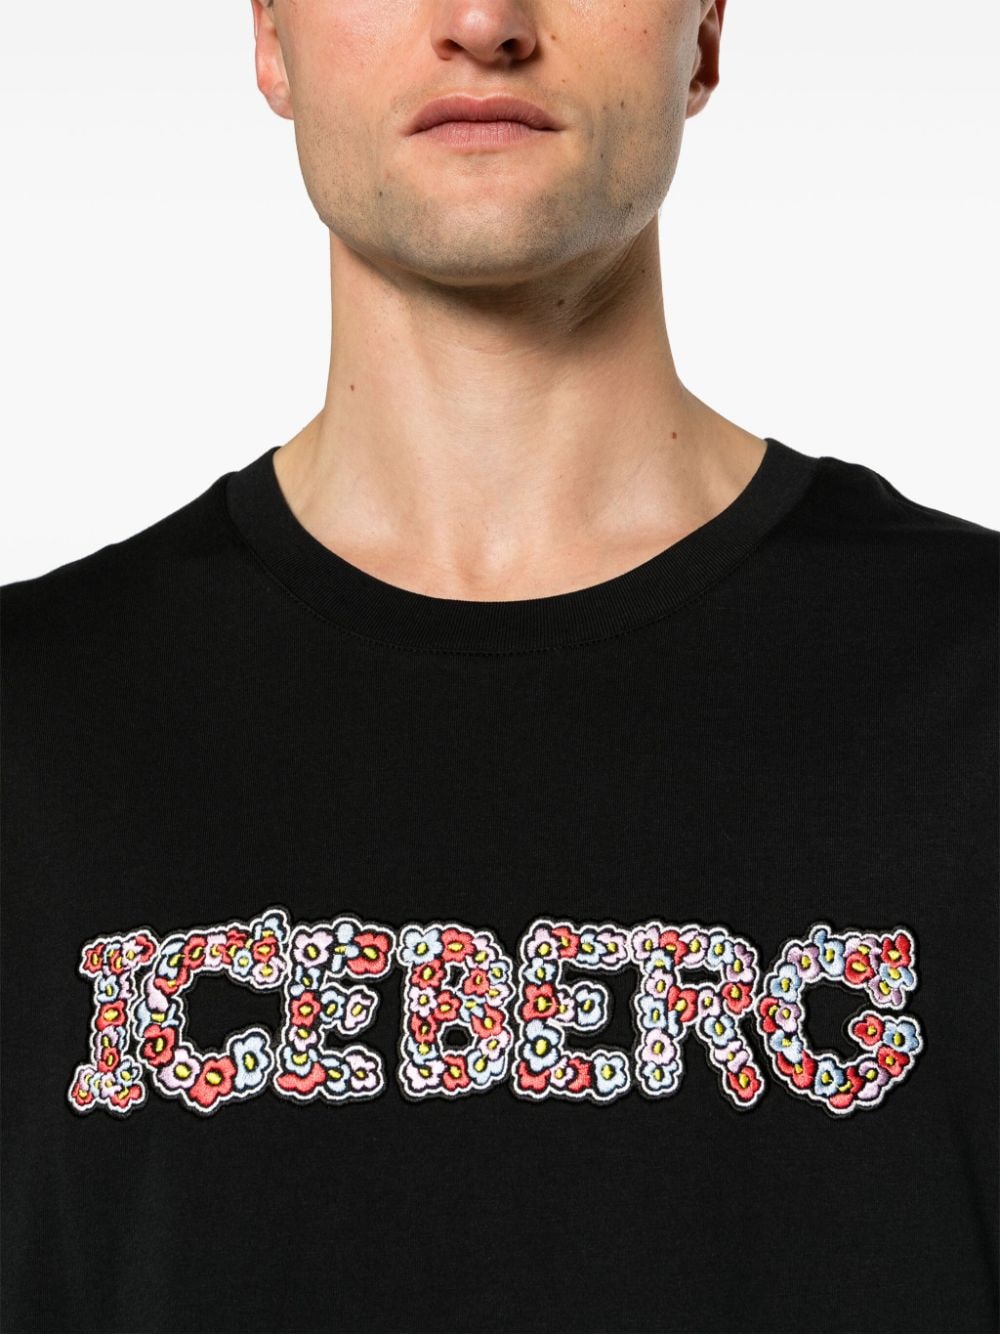 Iceberg ICEBERG- Cotton T-shirt